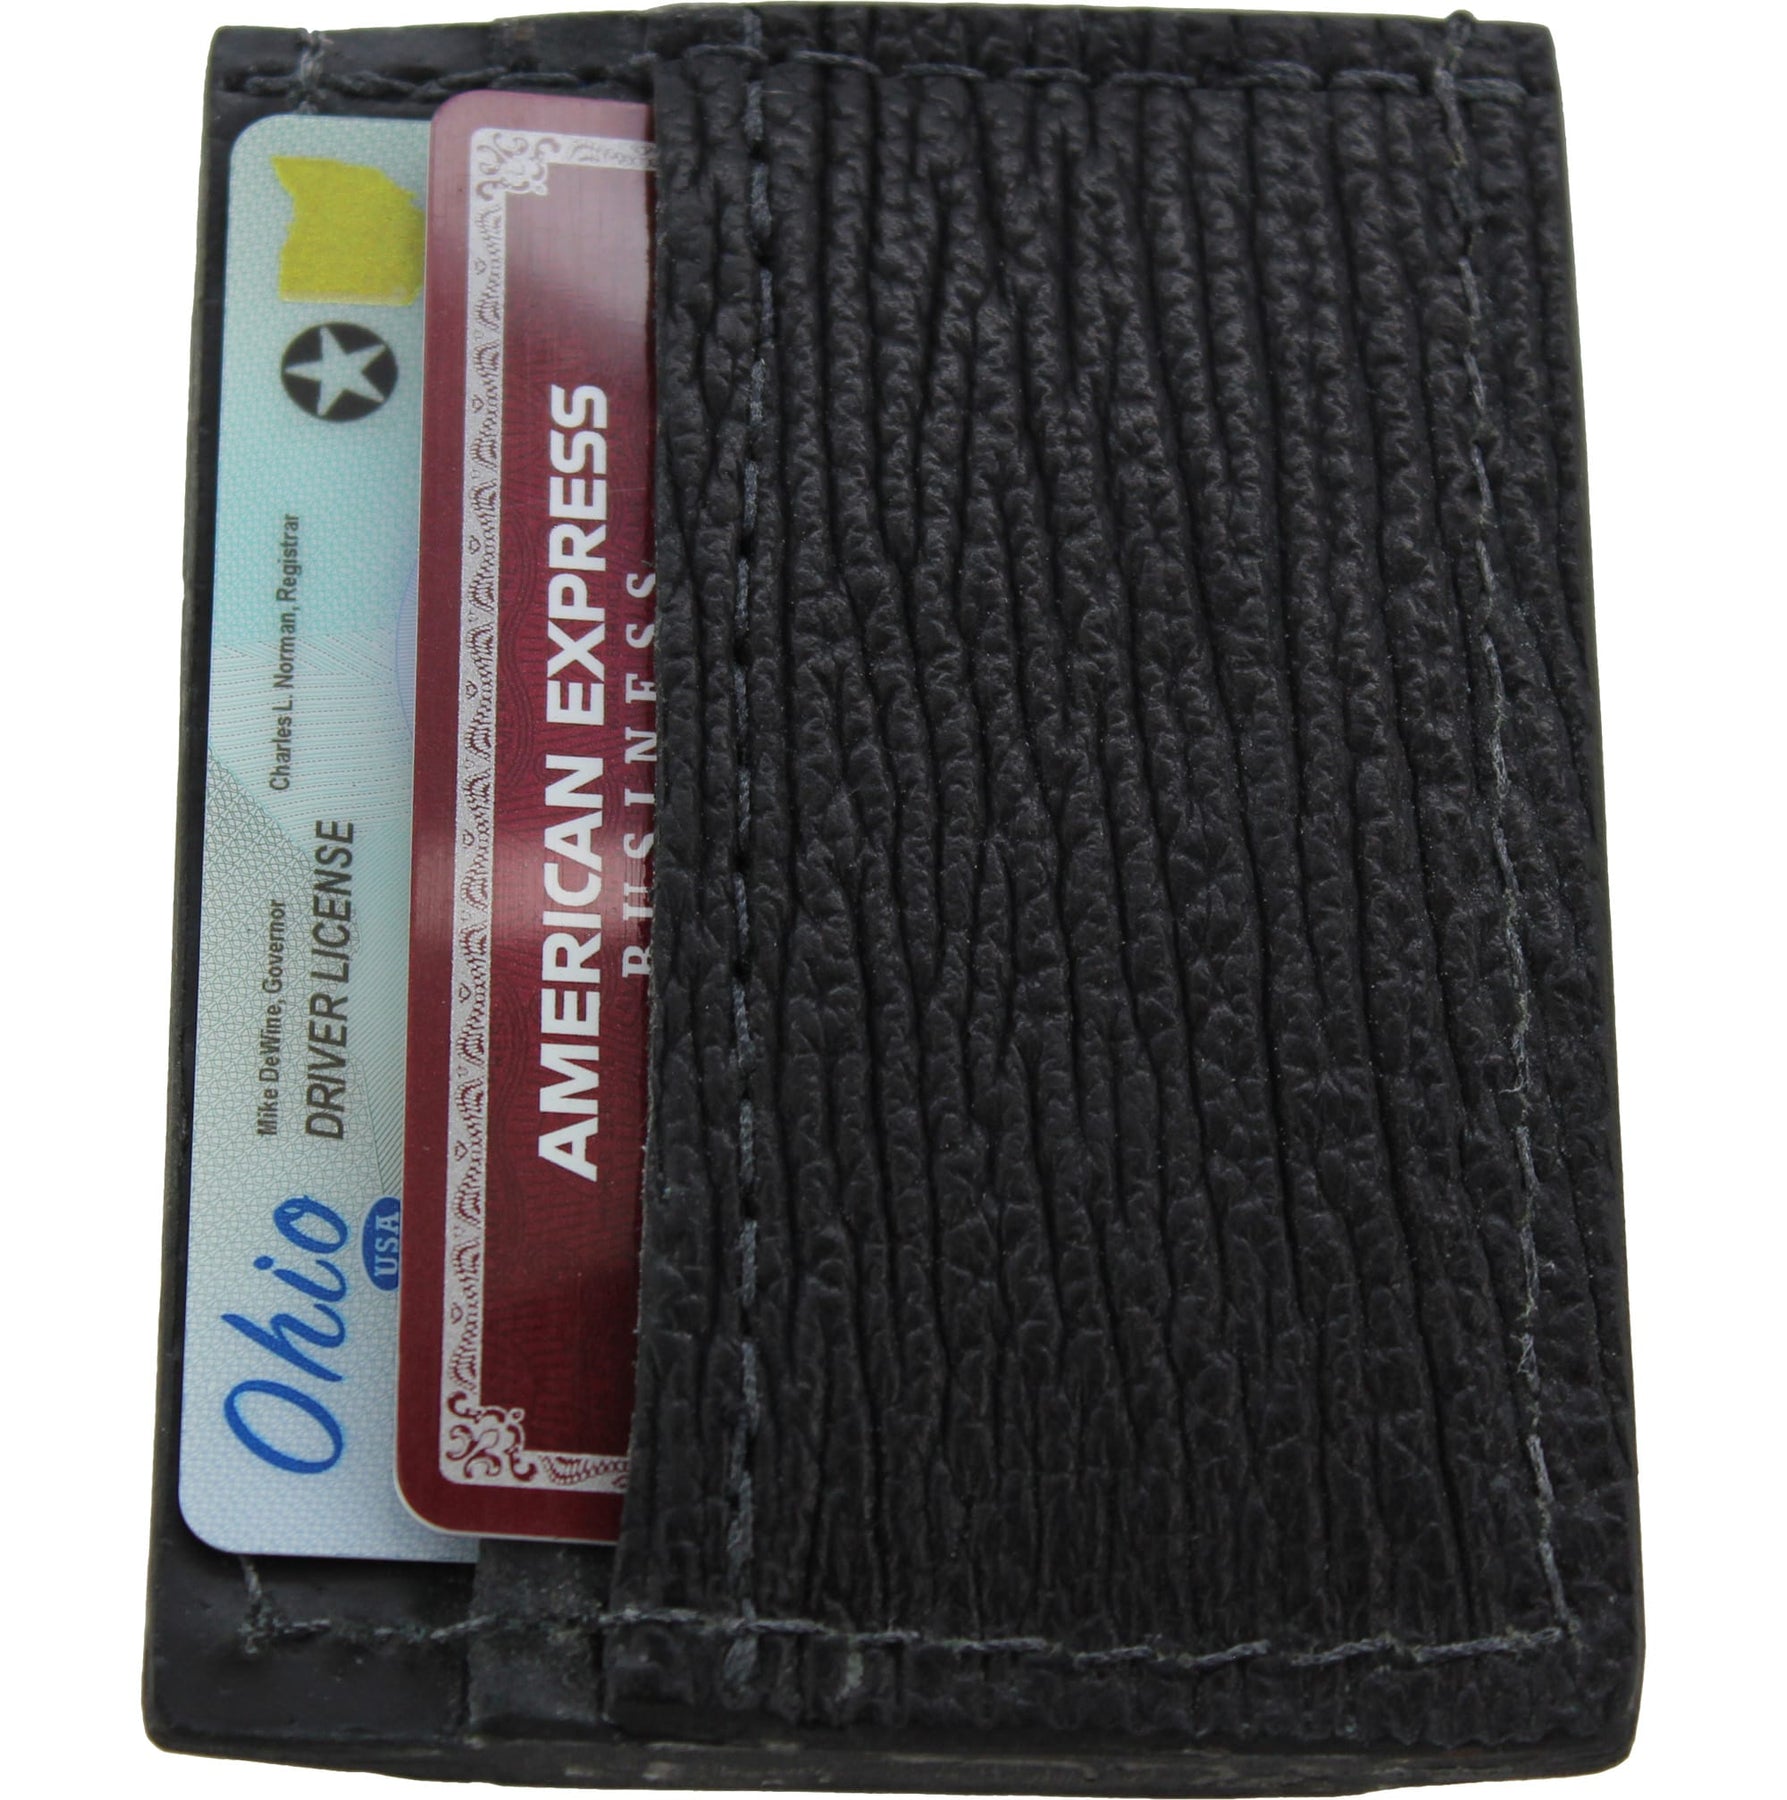 Buy American Tourister Men Black Slim Fold Wallet - Wallets for Men 42079